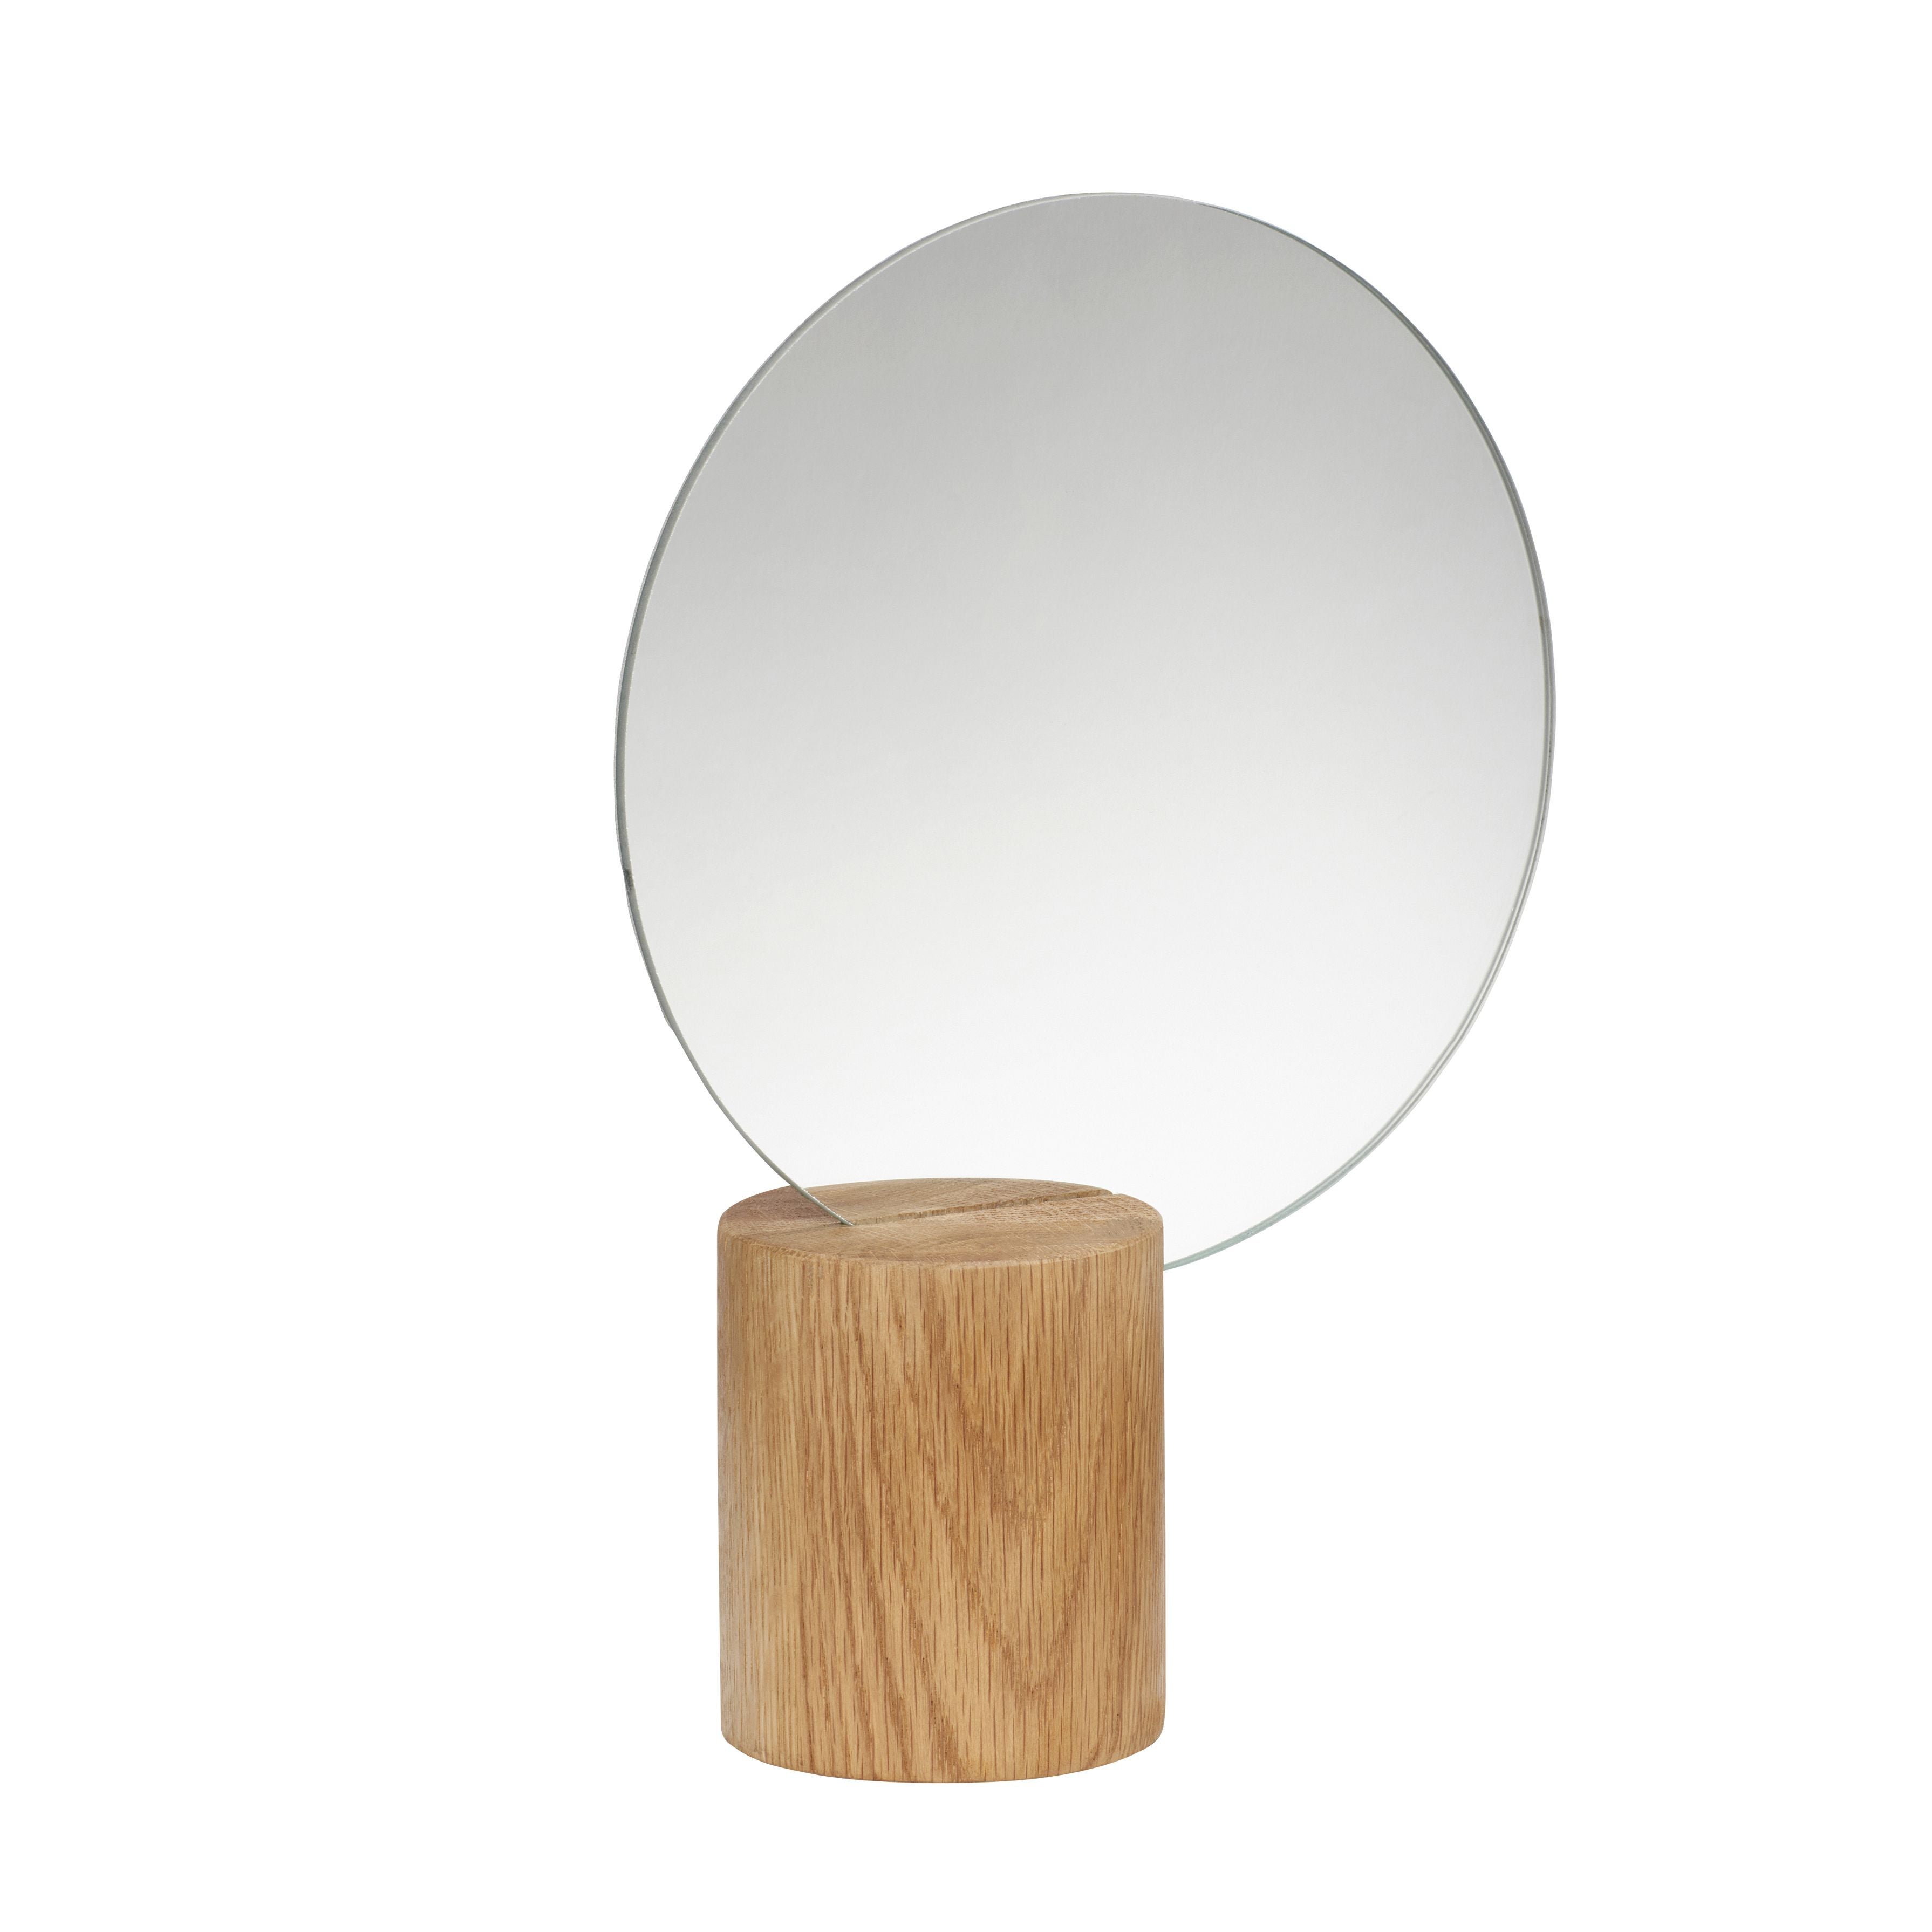 Hübsch边缘桌镜子木材自然圆形